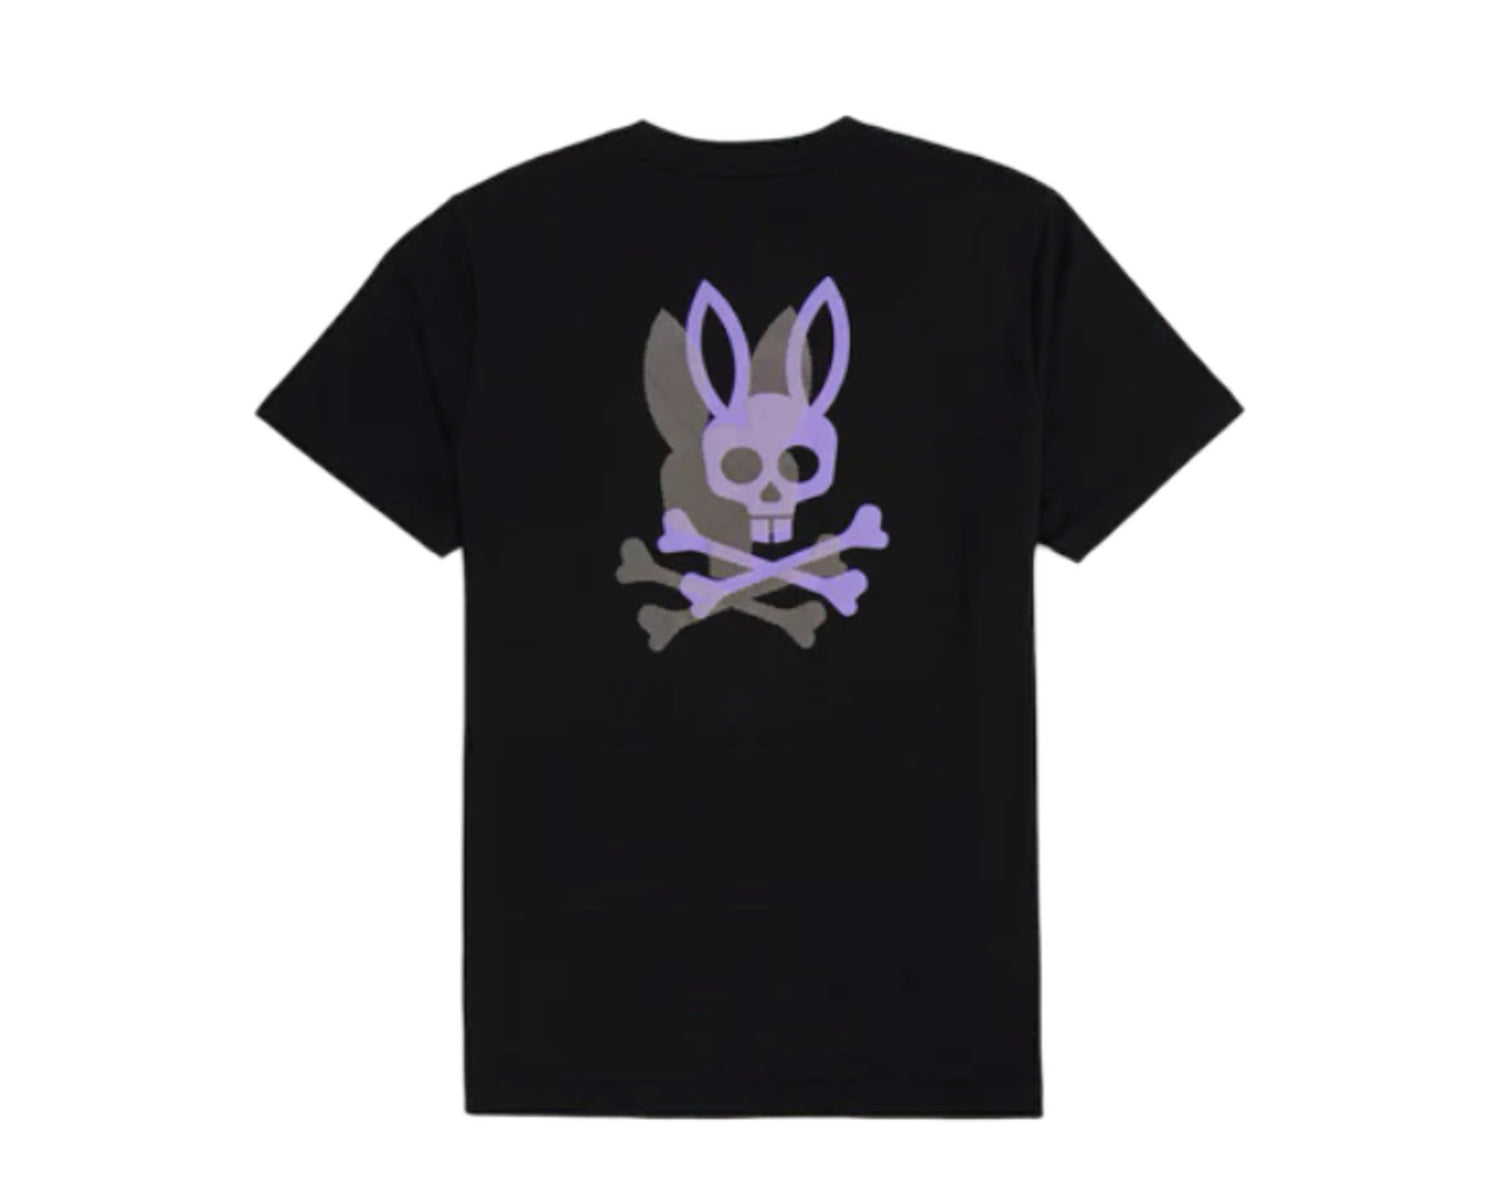 Psycho Bunny Chicago Back Graphic Men's Tee Shirt